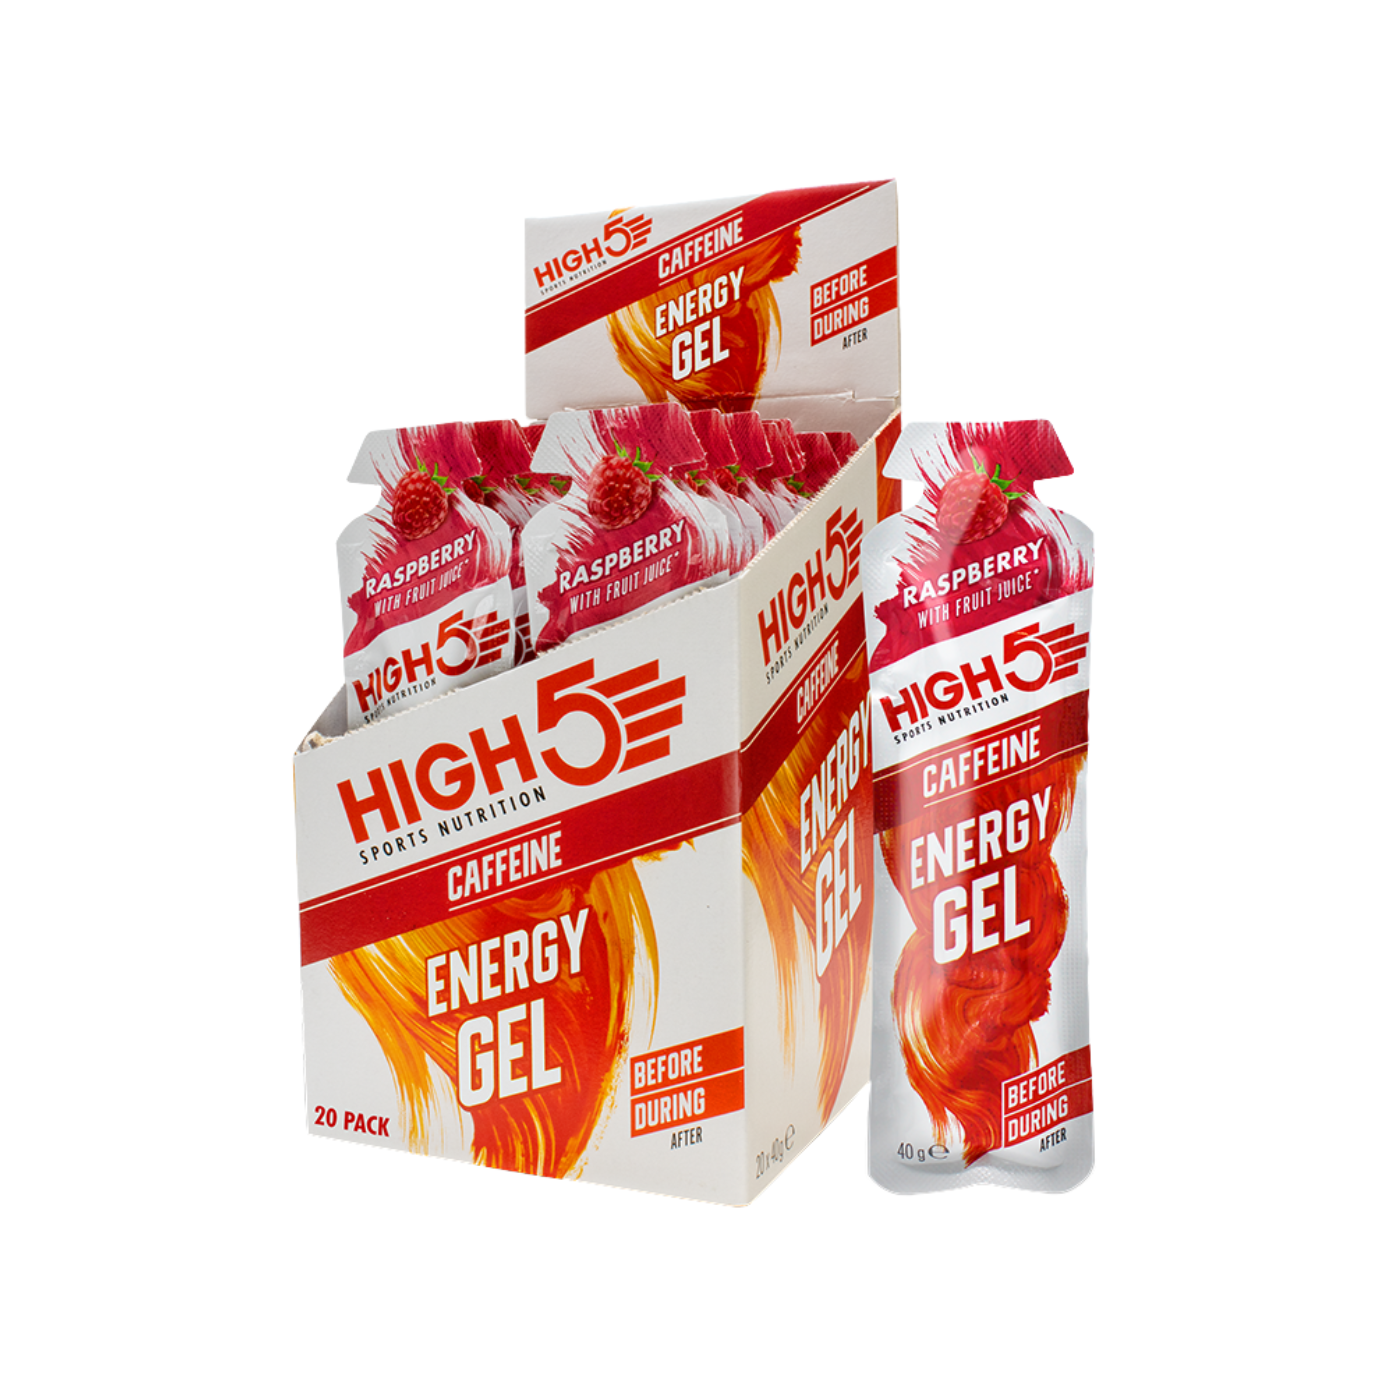 High5 Raspberry Caffeine Energy Gel 40g